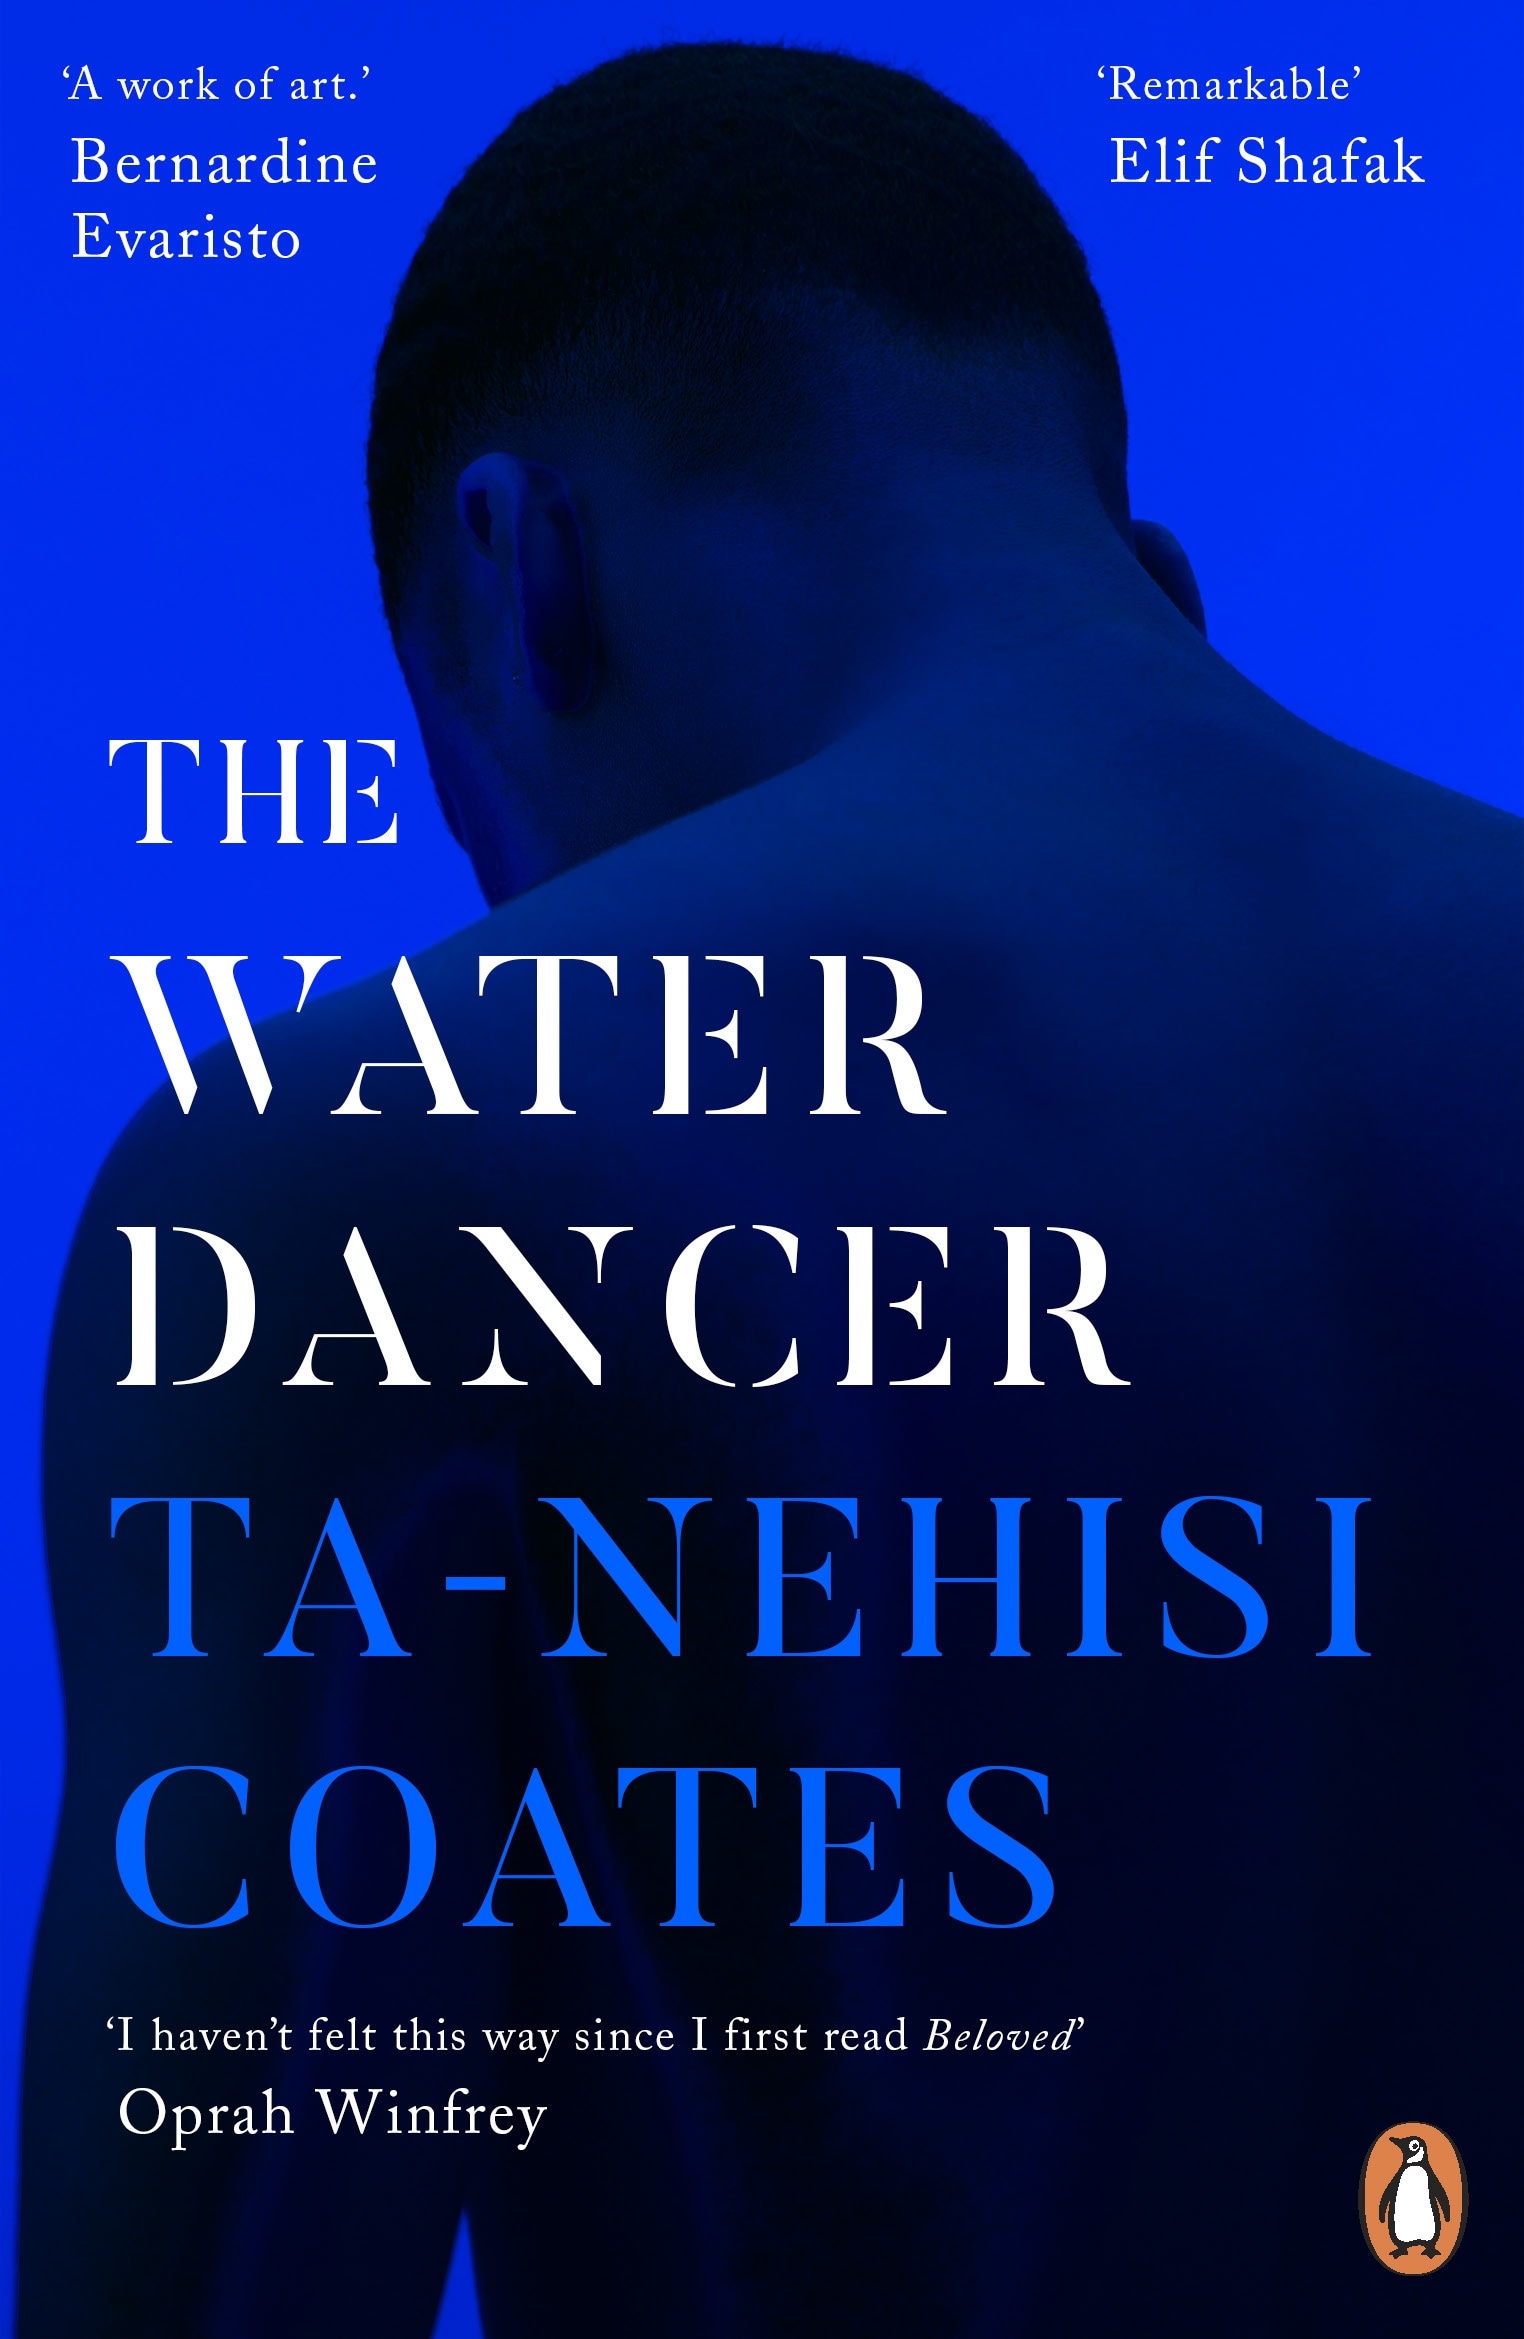 Book “The Water Dancer” by Ta-Nehisi Coates — November 19, 2020